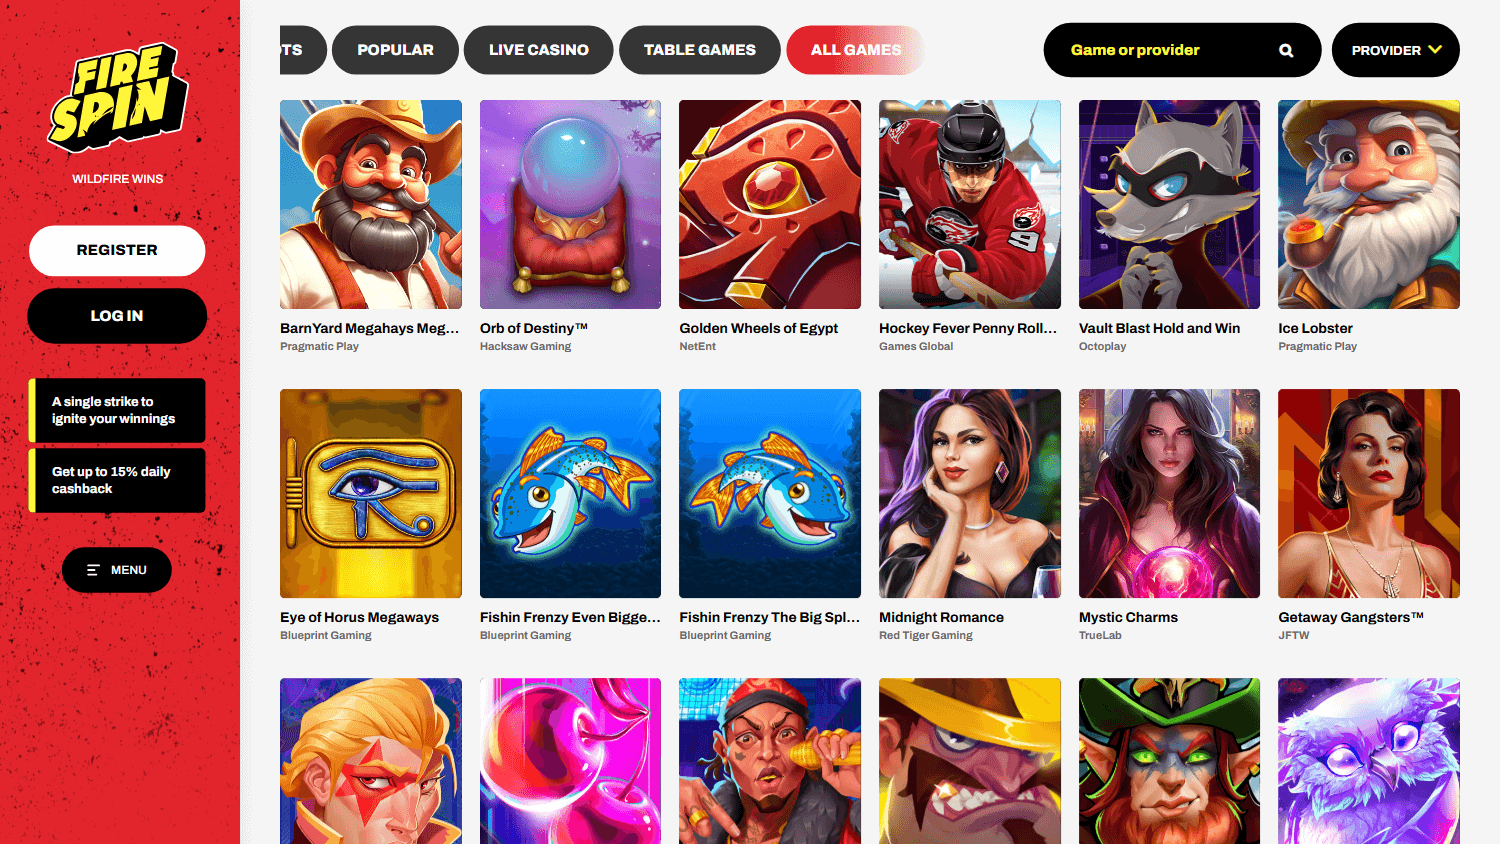 firespin_casino_game_gallery_desktop